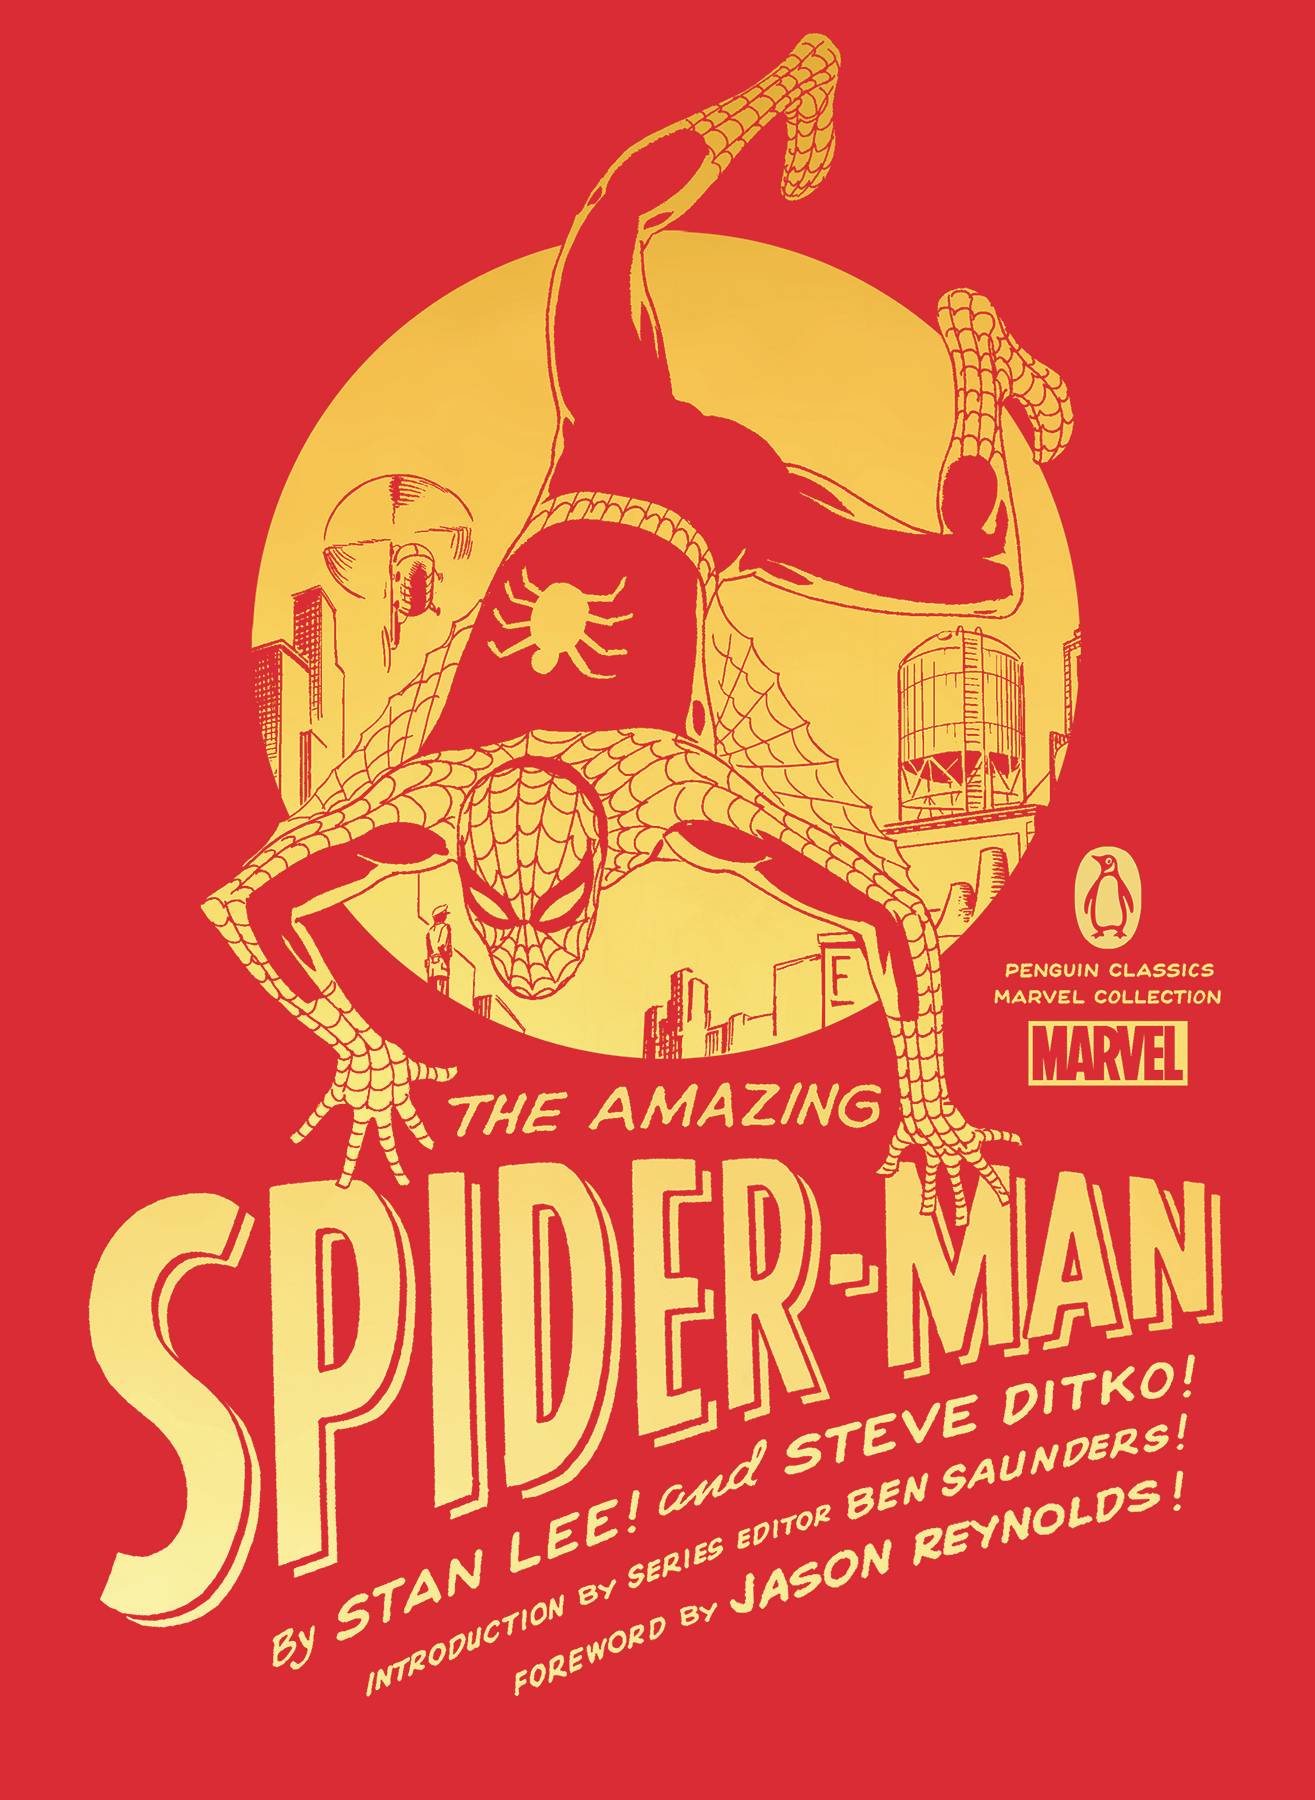 Penguin Classics Marvel Collection HC The Amazing Spider-Man